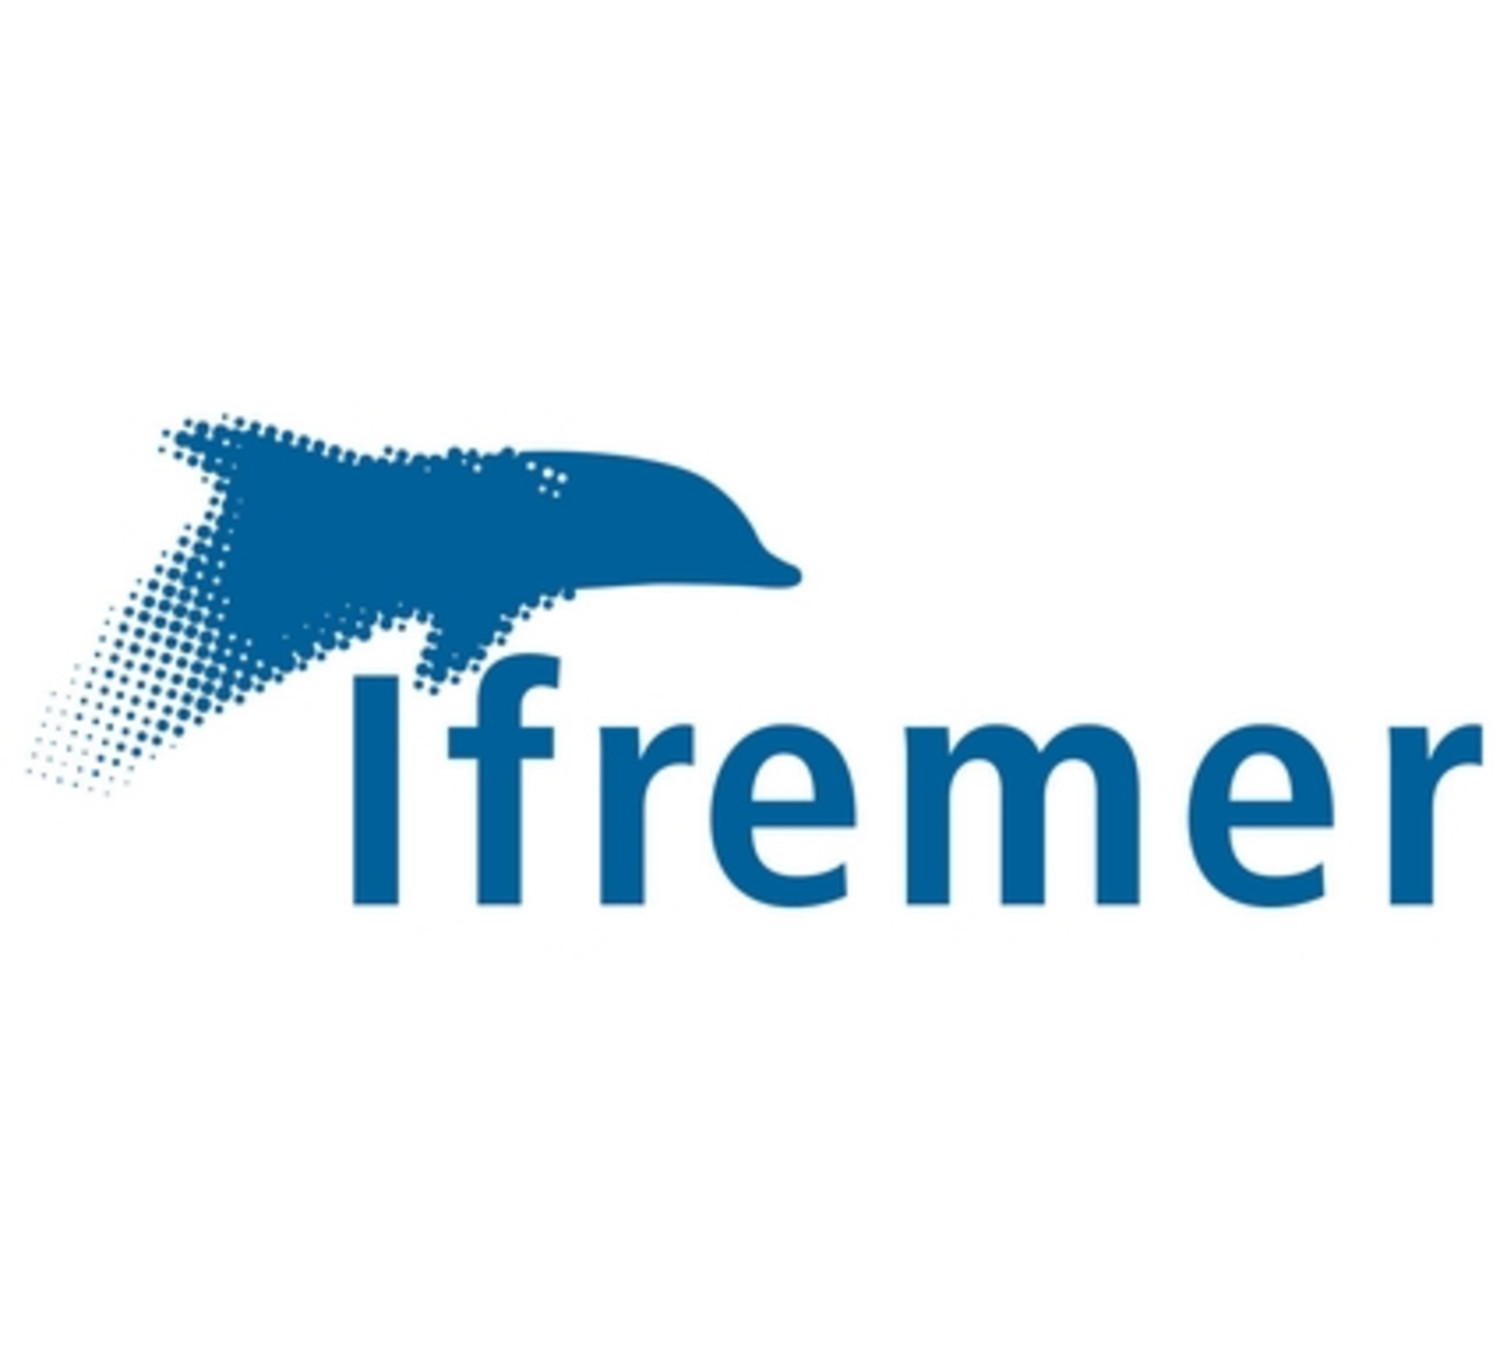 Logo-Ifremer